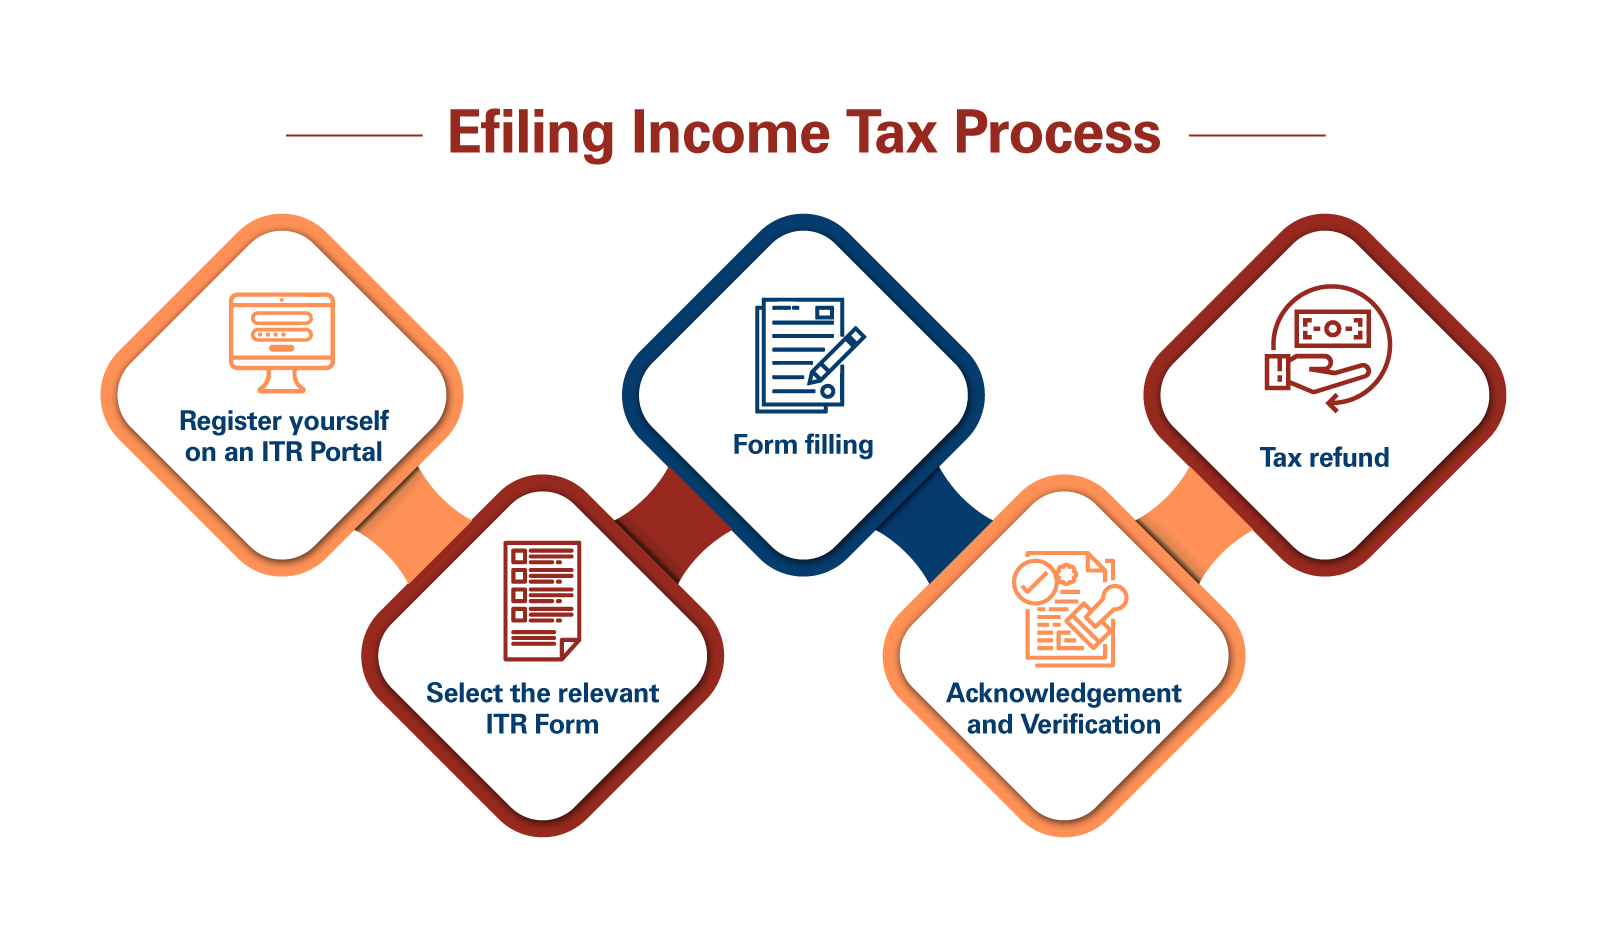 E-filing Income Tax Returns